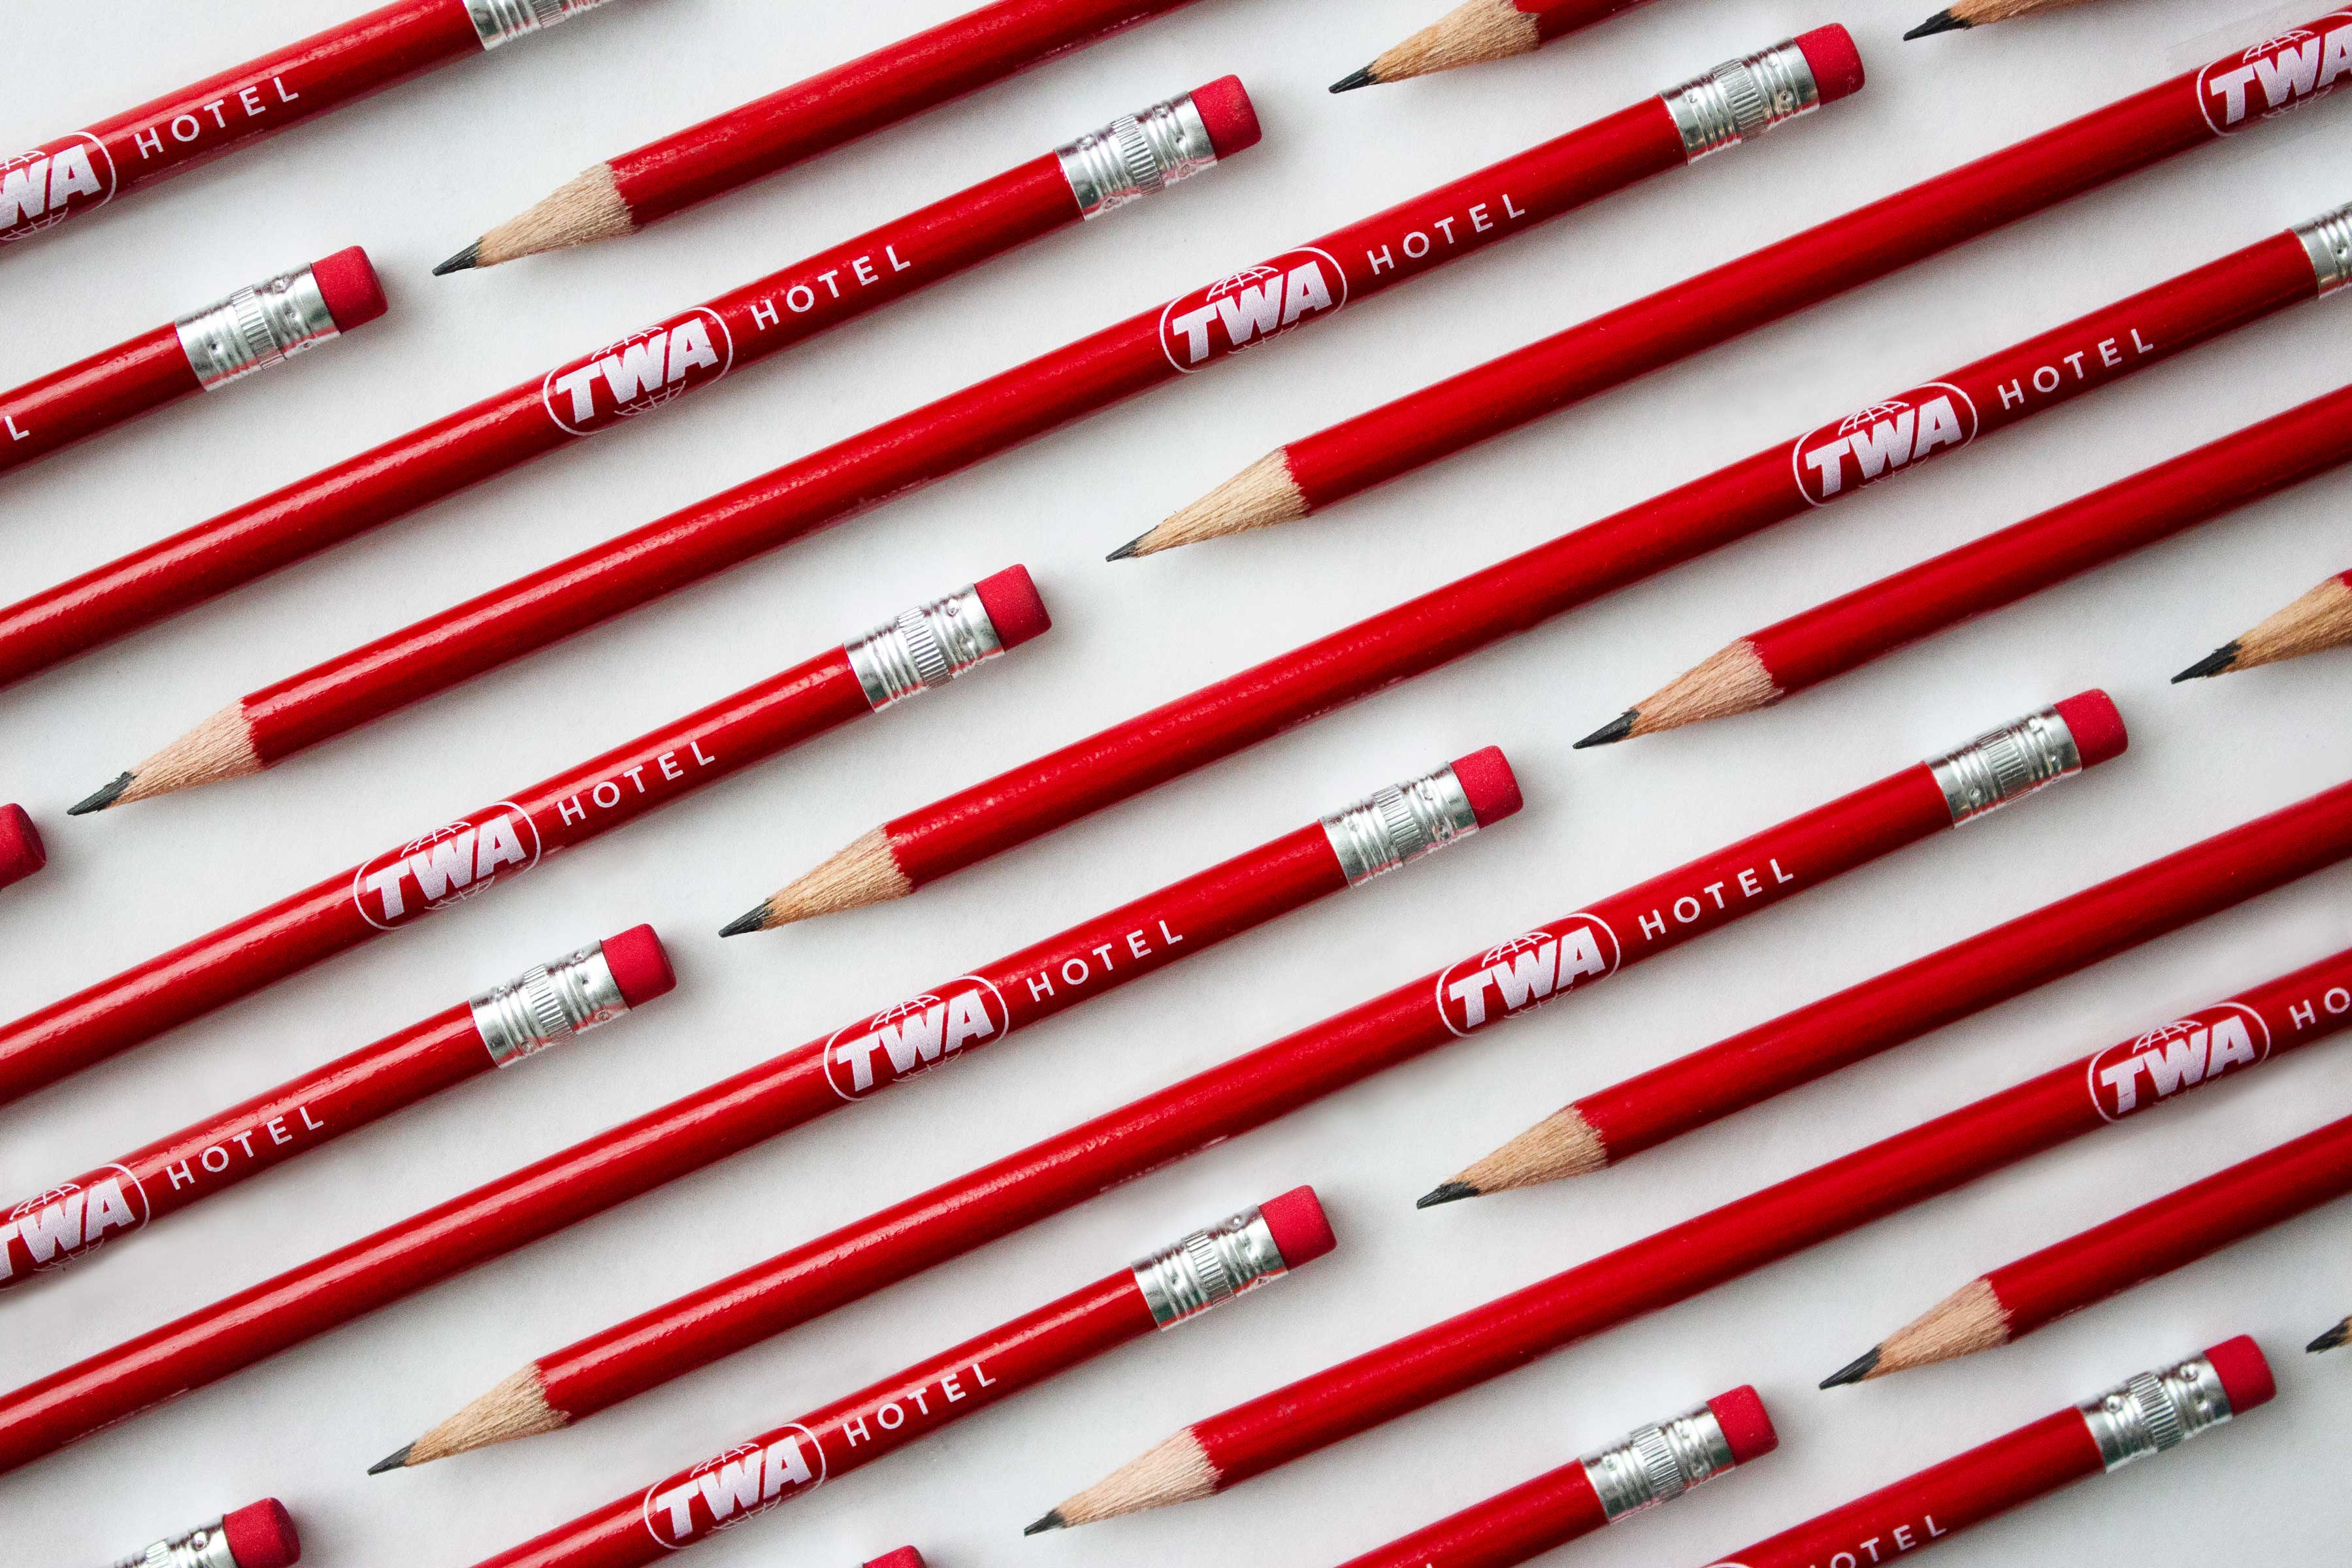 TWA Hotel Musgrave Pencils